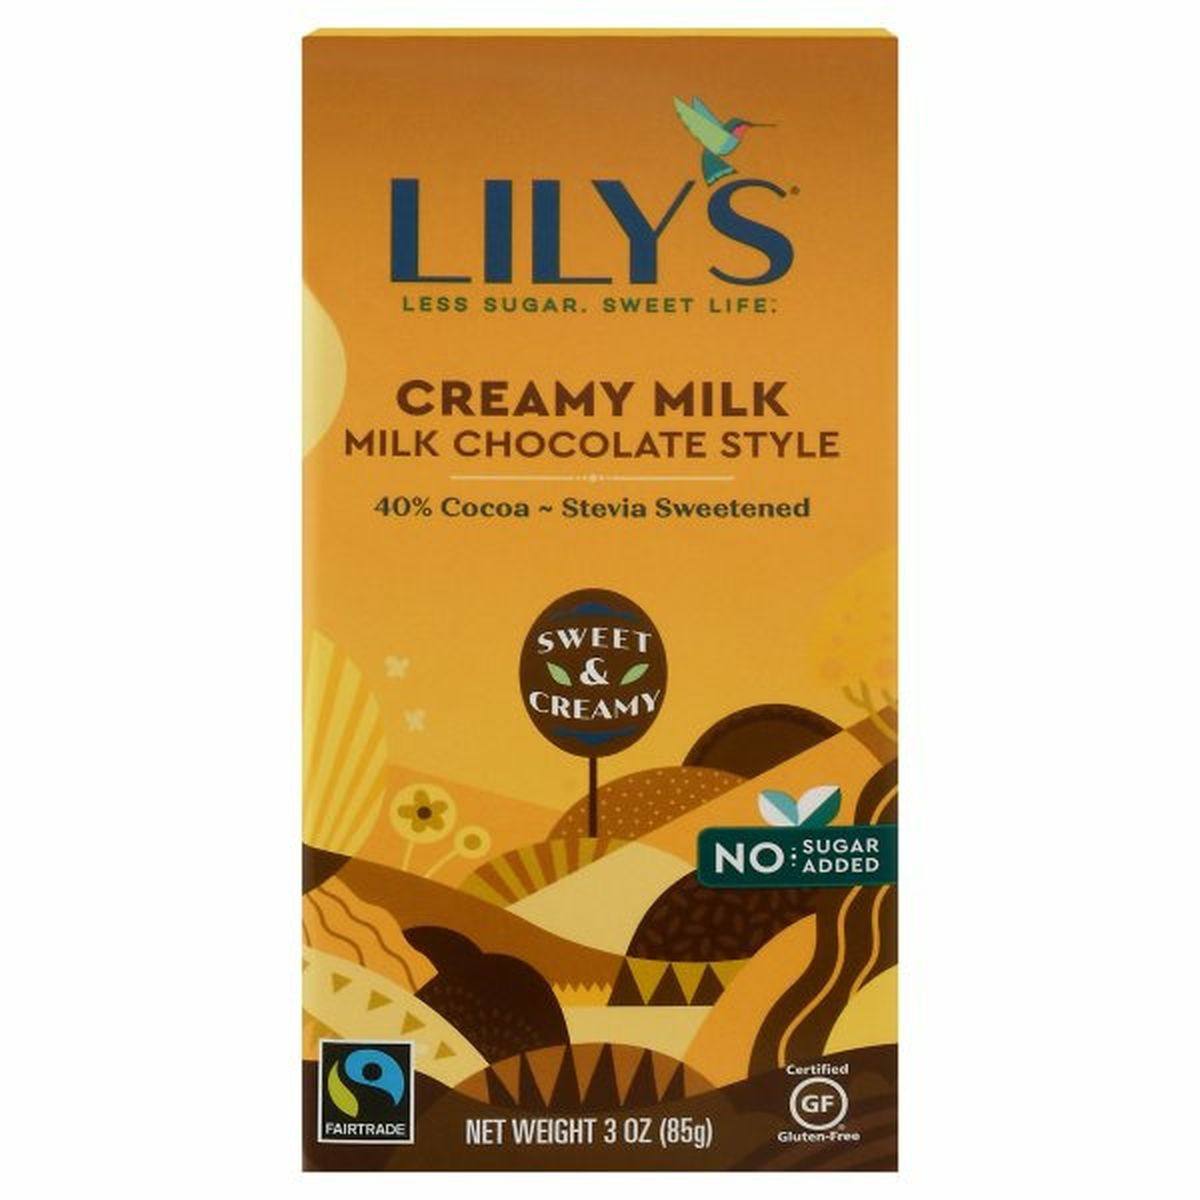 Calories in Lily's Milk Chocolate, Creamy Milk, 40% Cocoa